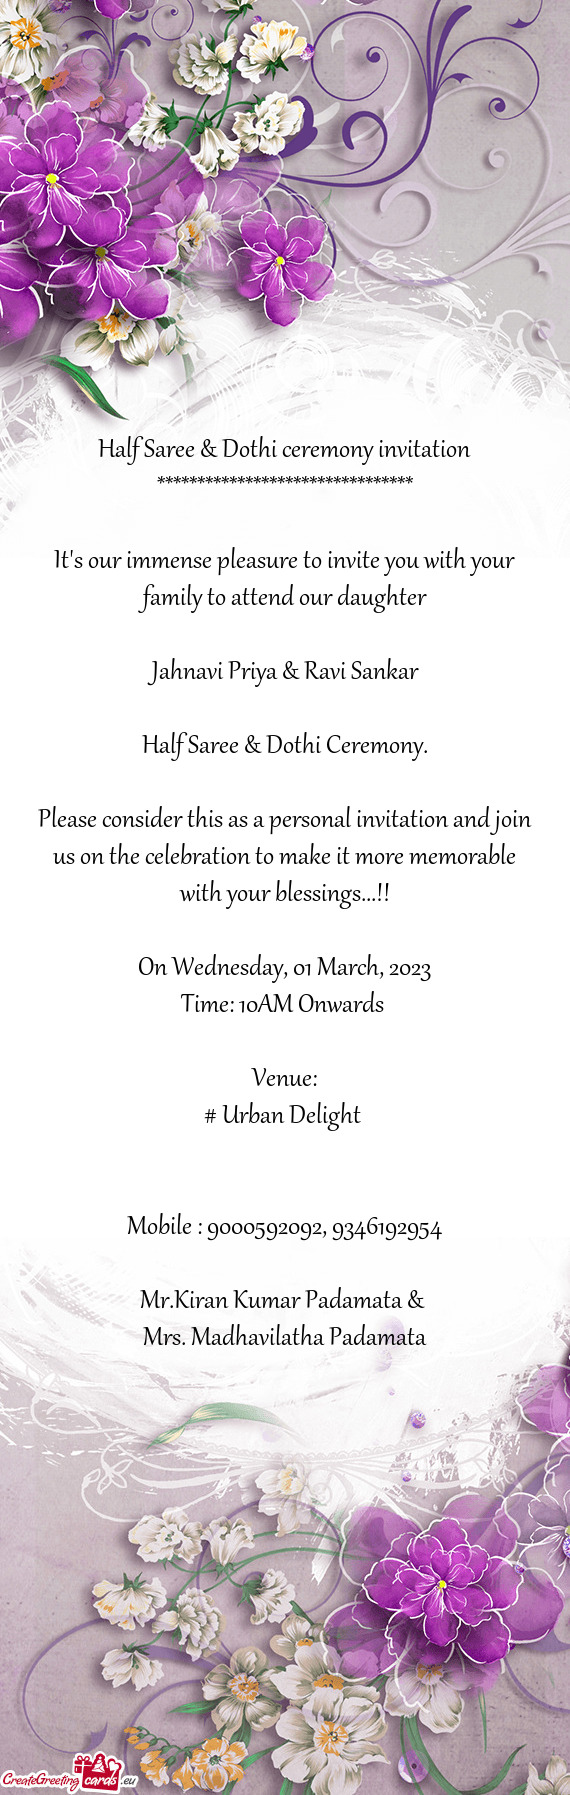 Half Saree & Dothi ceremony invitation